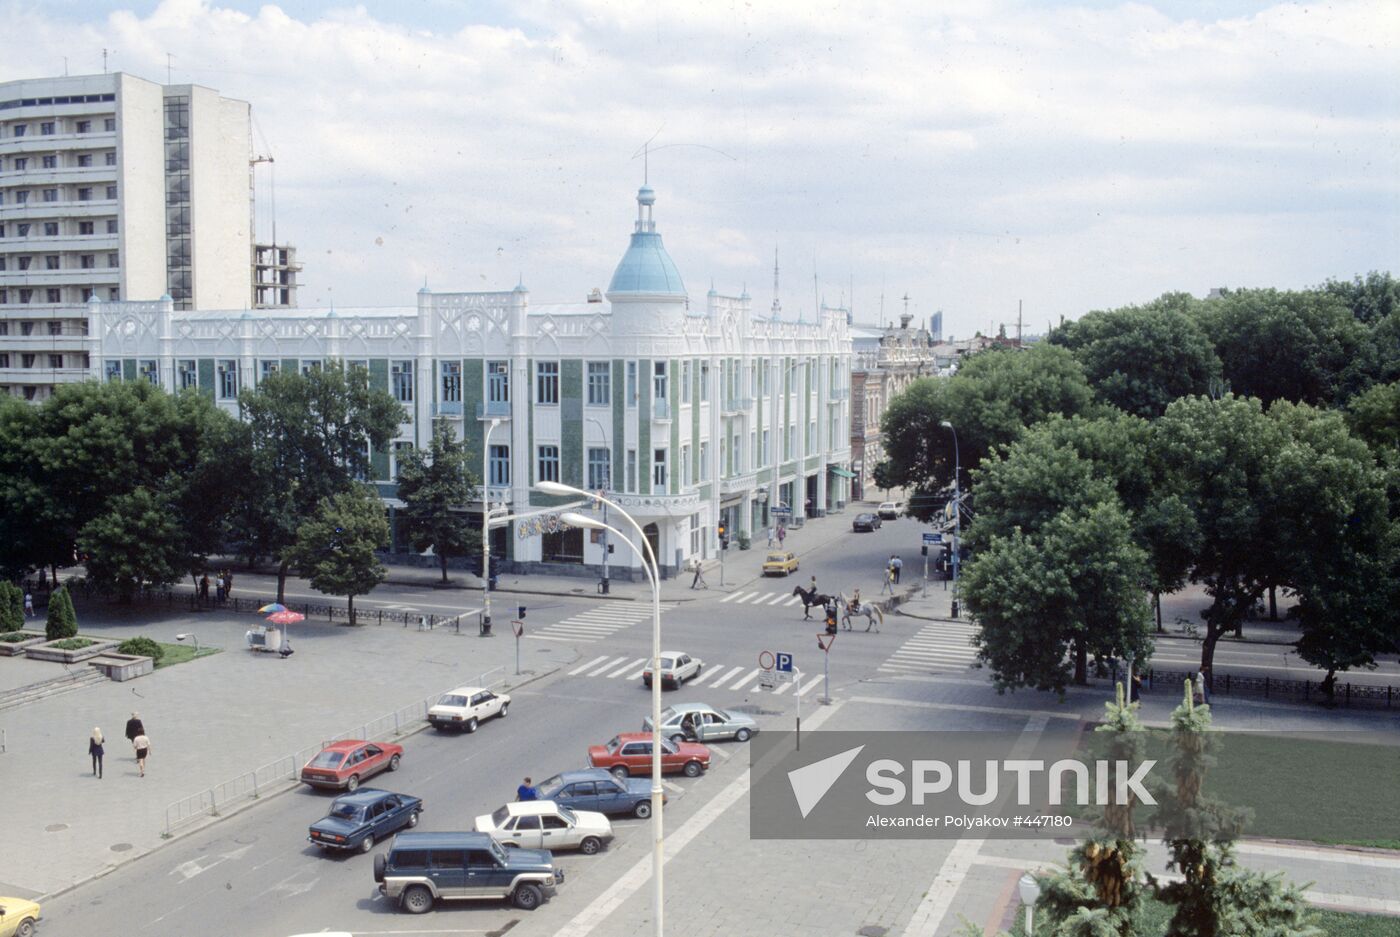 Central Krasnodar